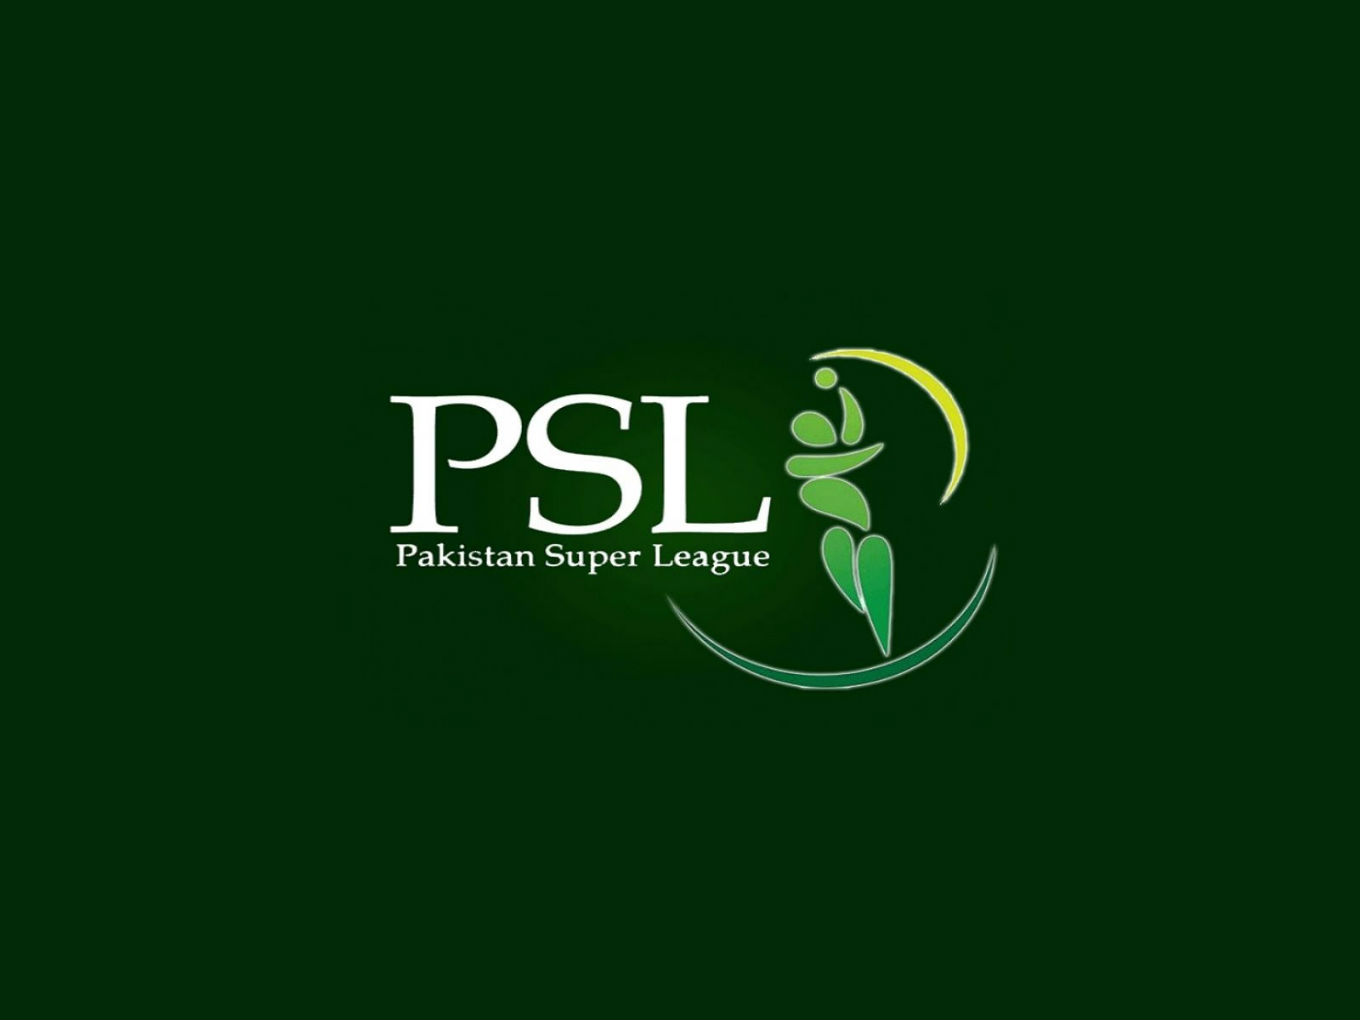 Cricbuzz, Dream11 Bans Pakistan Super League Post Pulwama Attack